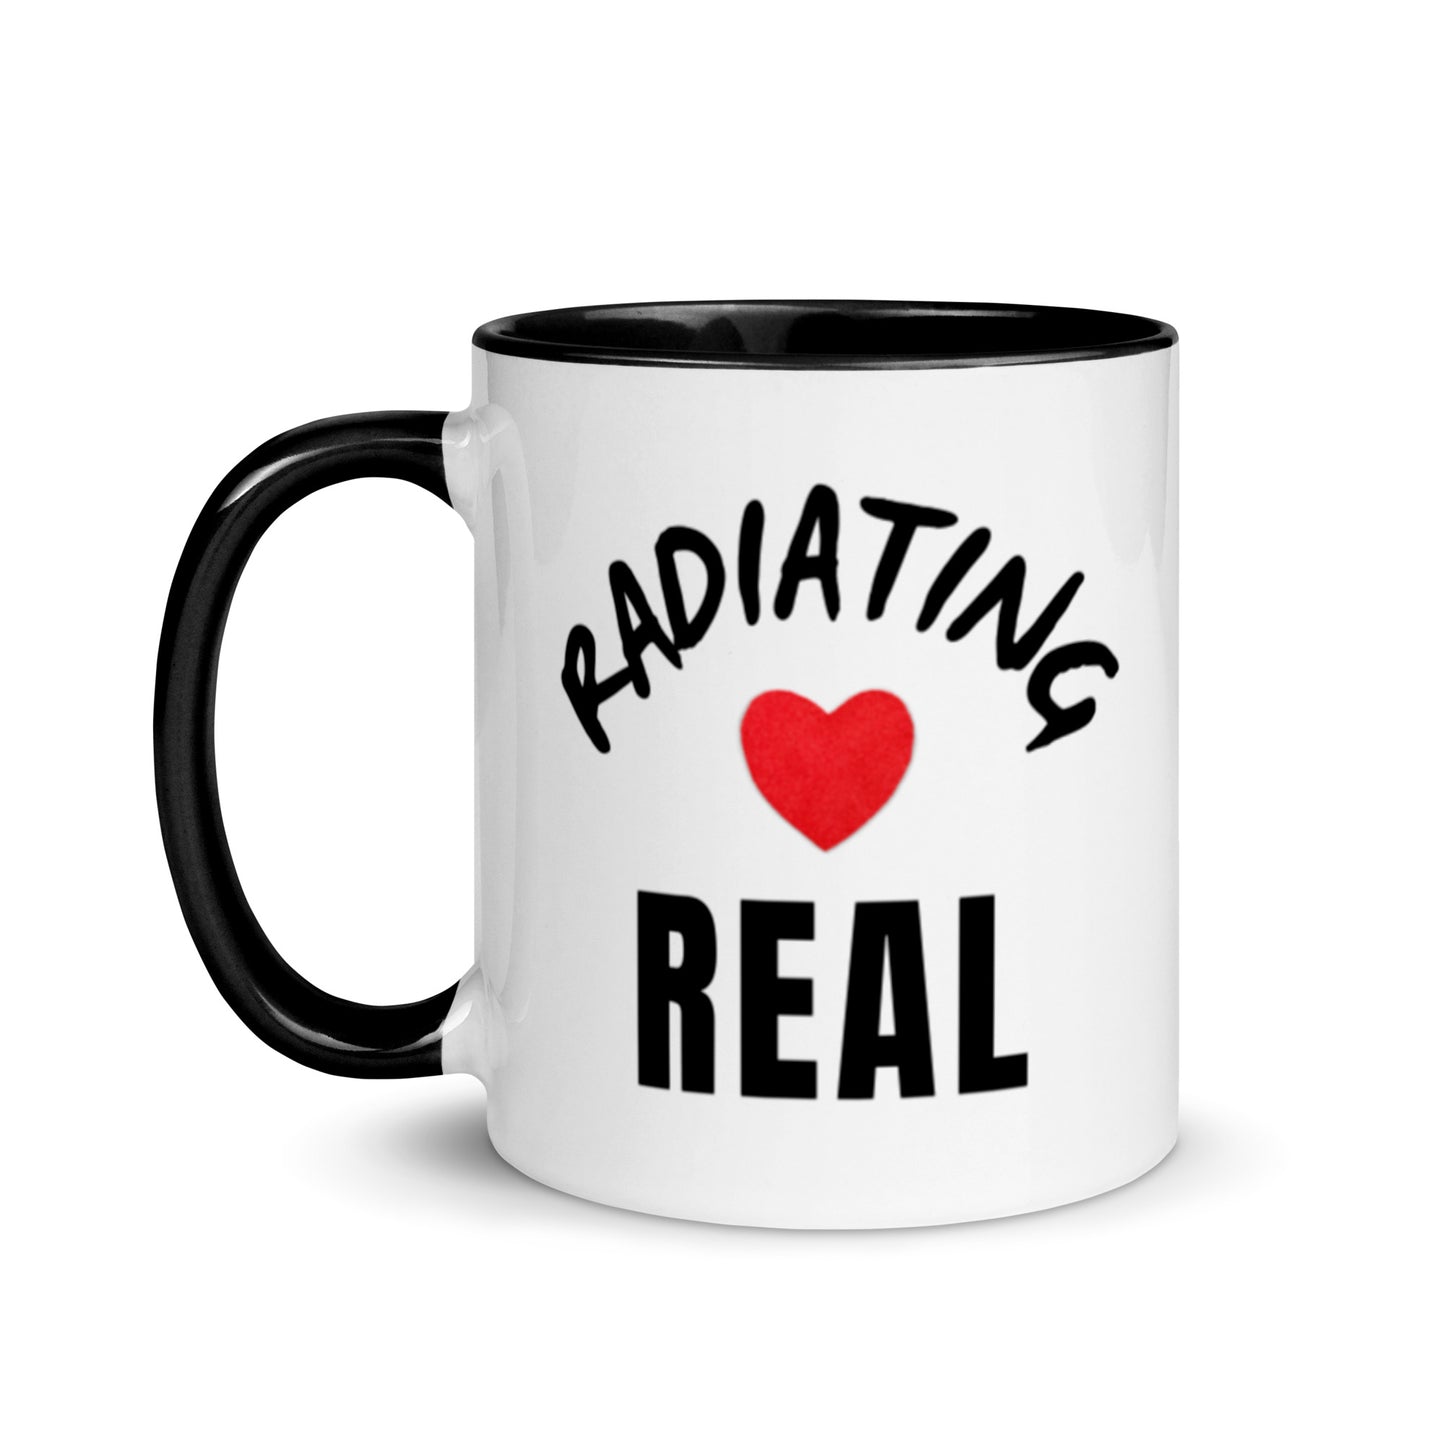 Radiating Real Mug